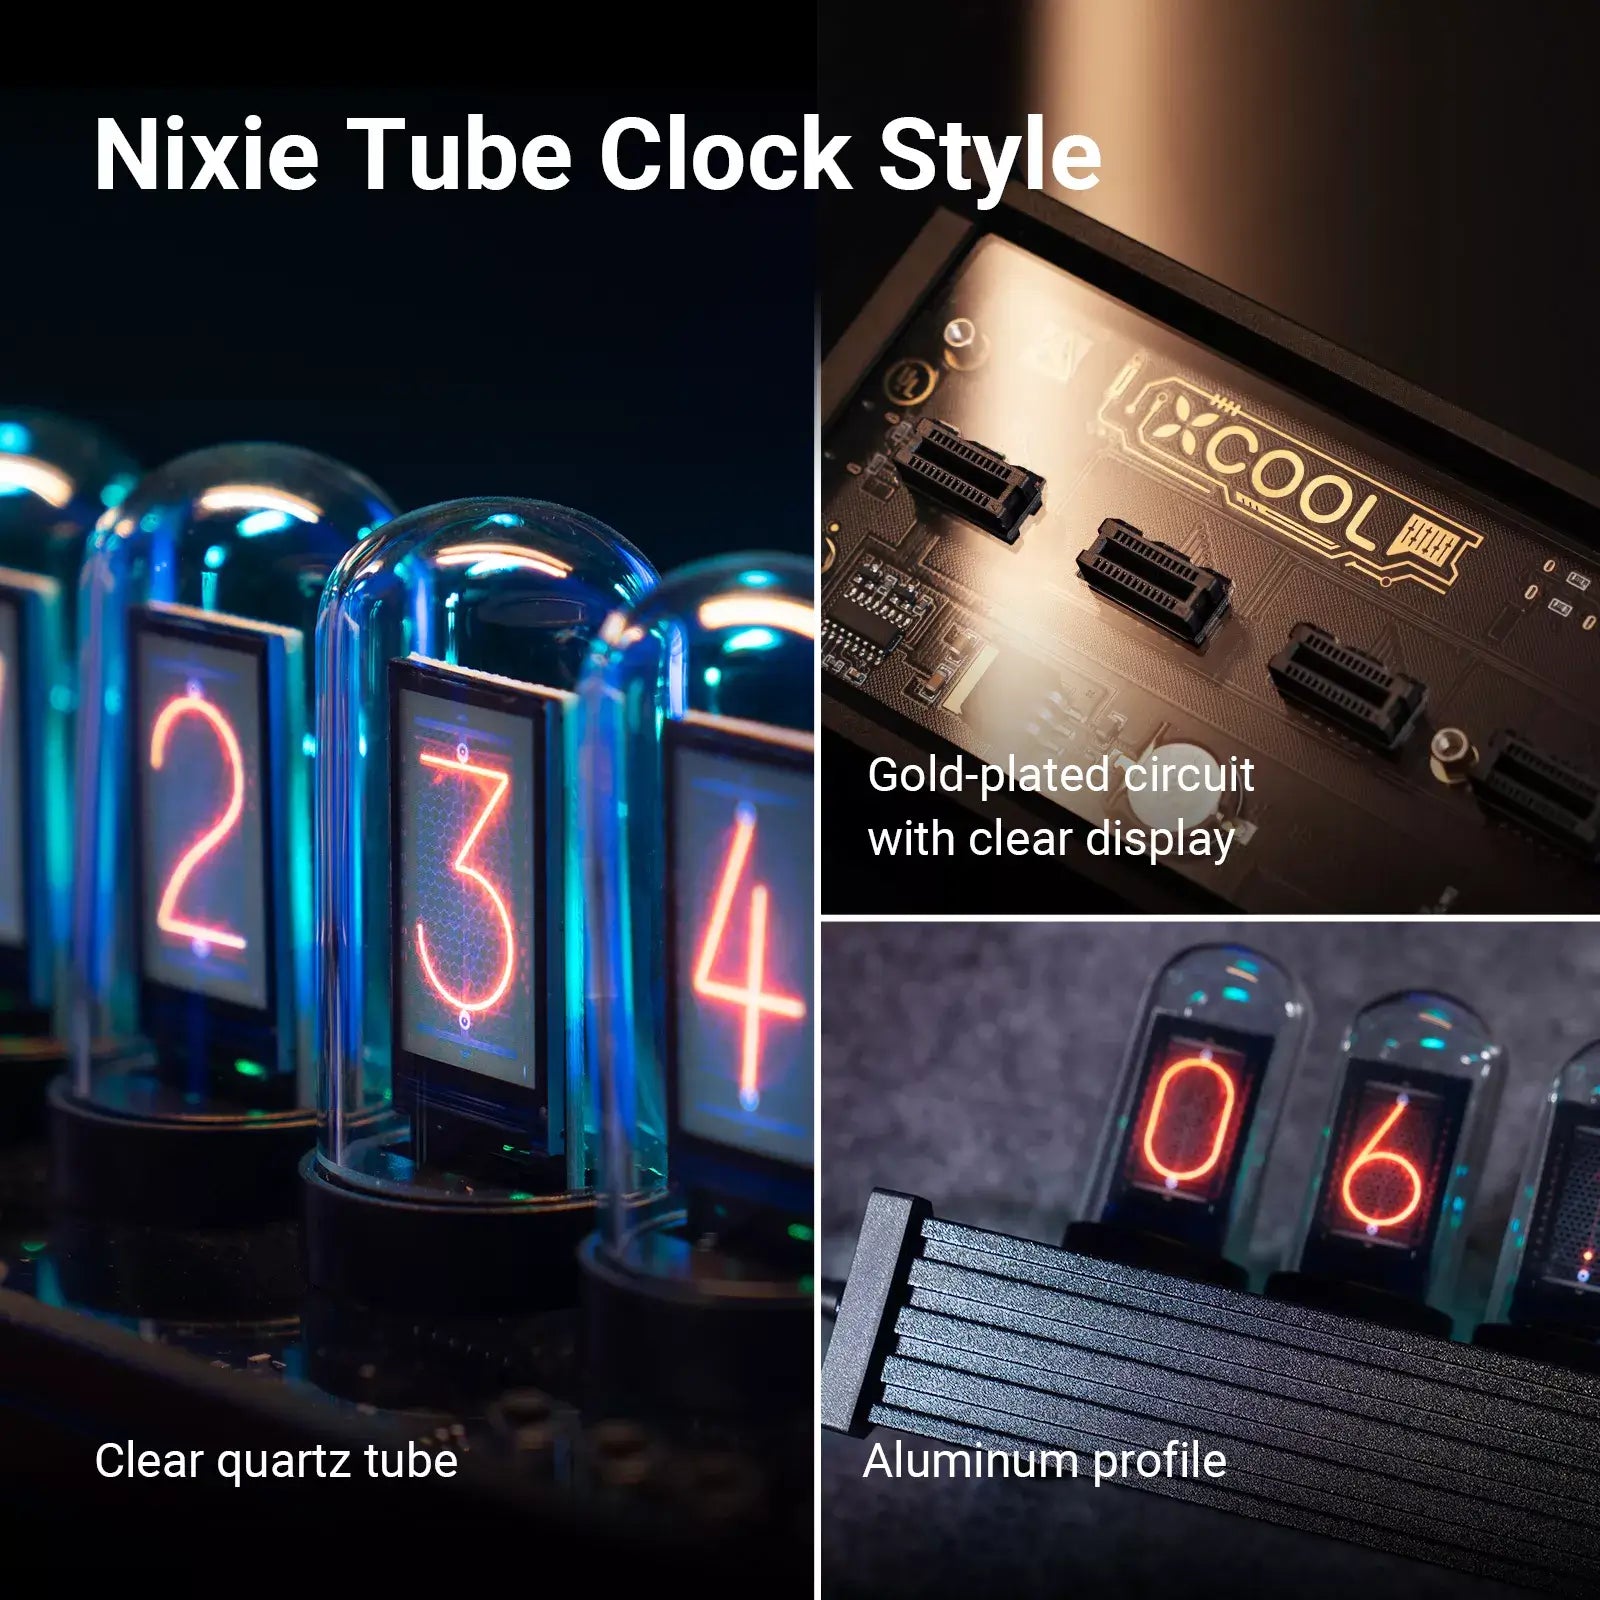 xCool Elekstube Nixie Tube Clock in Cyberpunk & Vintage Decor with Mood Lighting